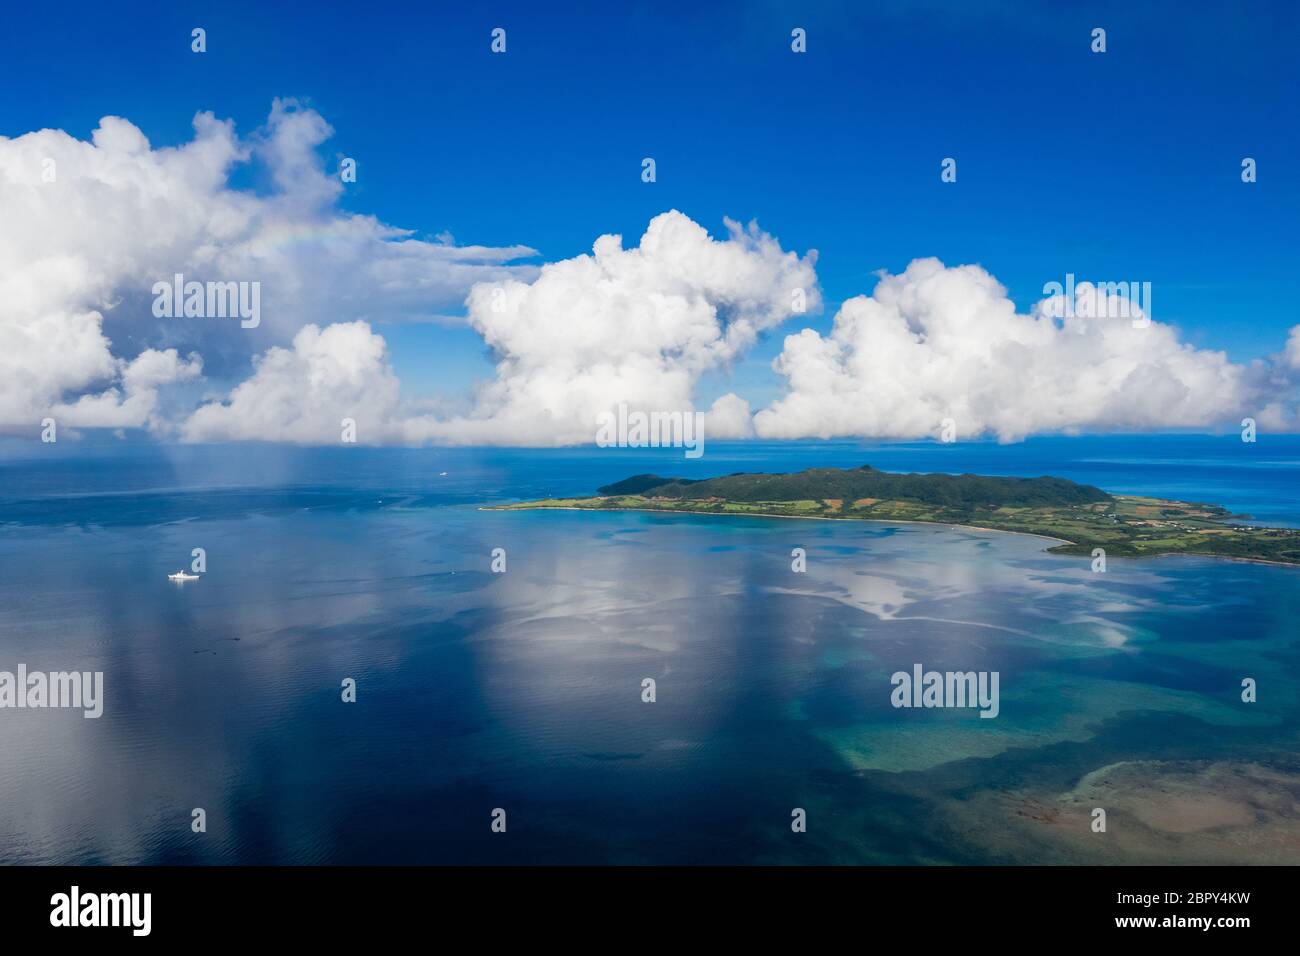 Vue de dessus de l'île ishigaki Banque D'Images